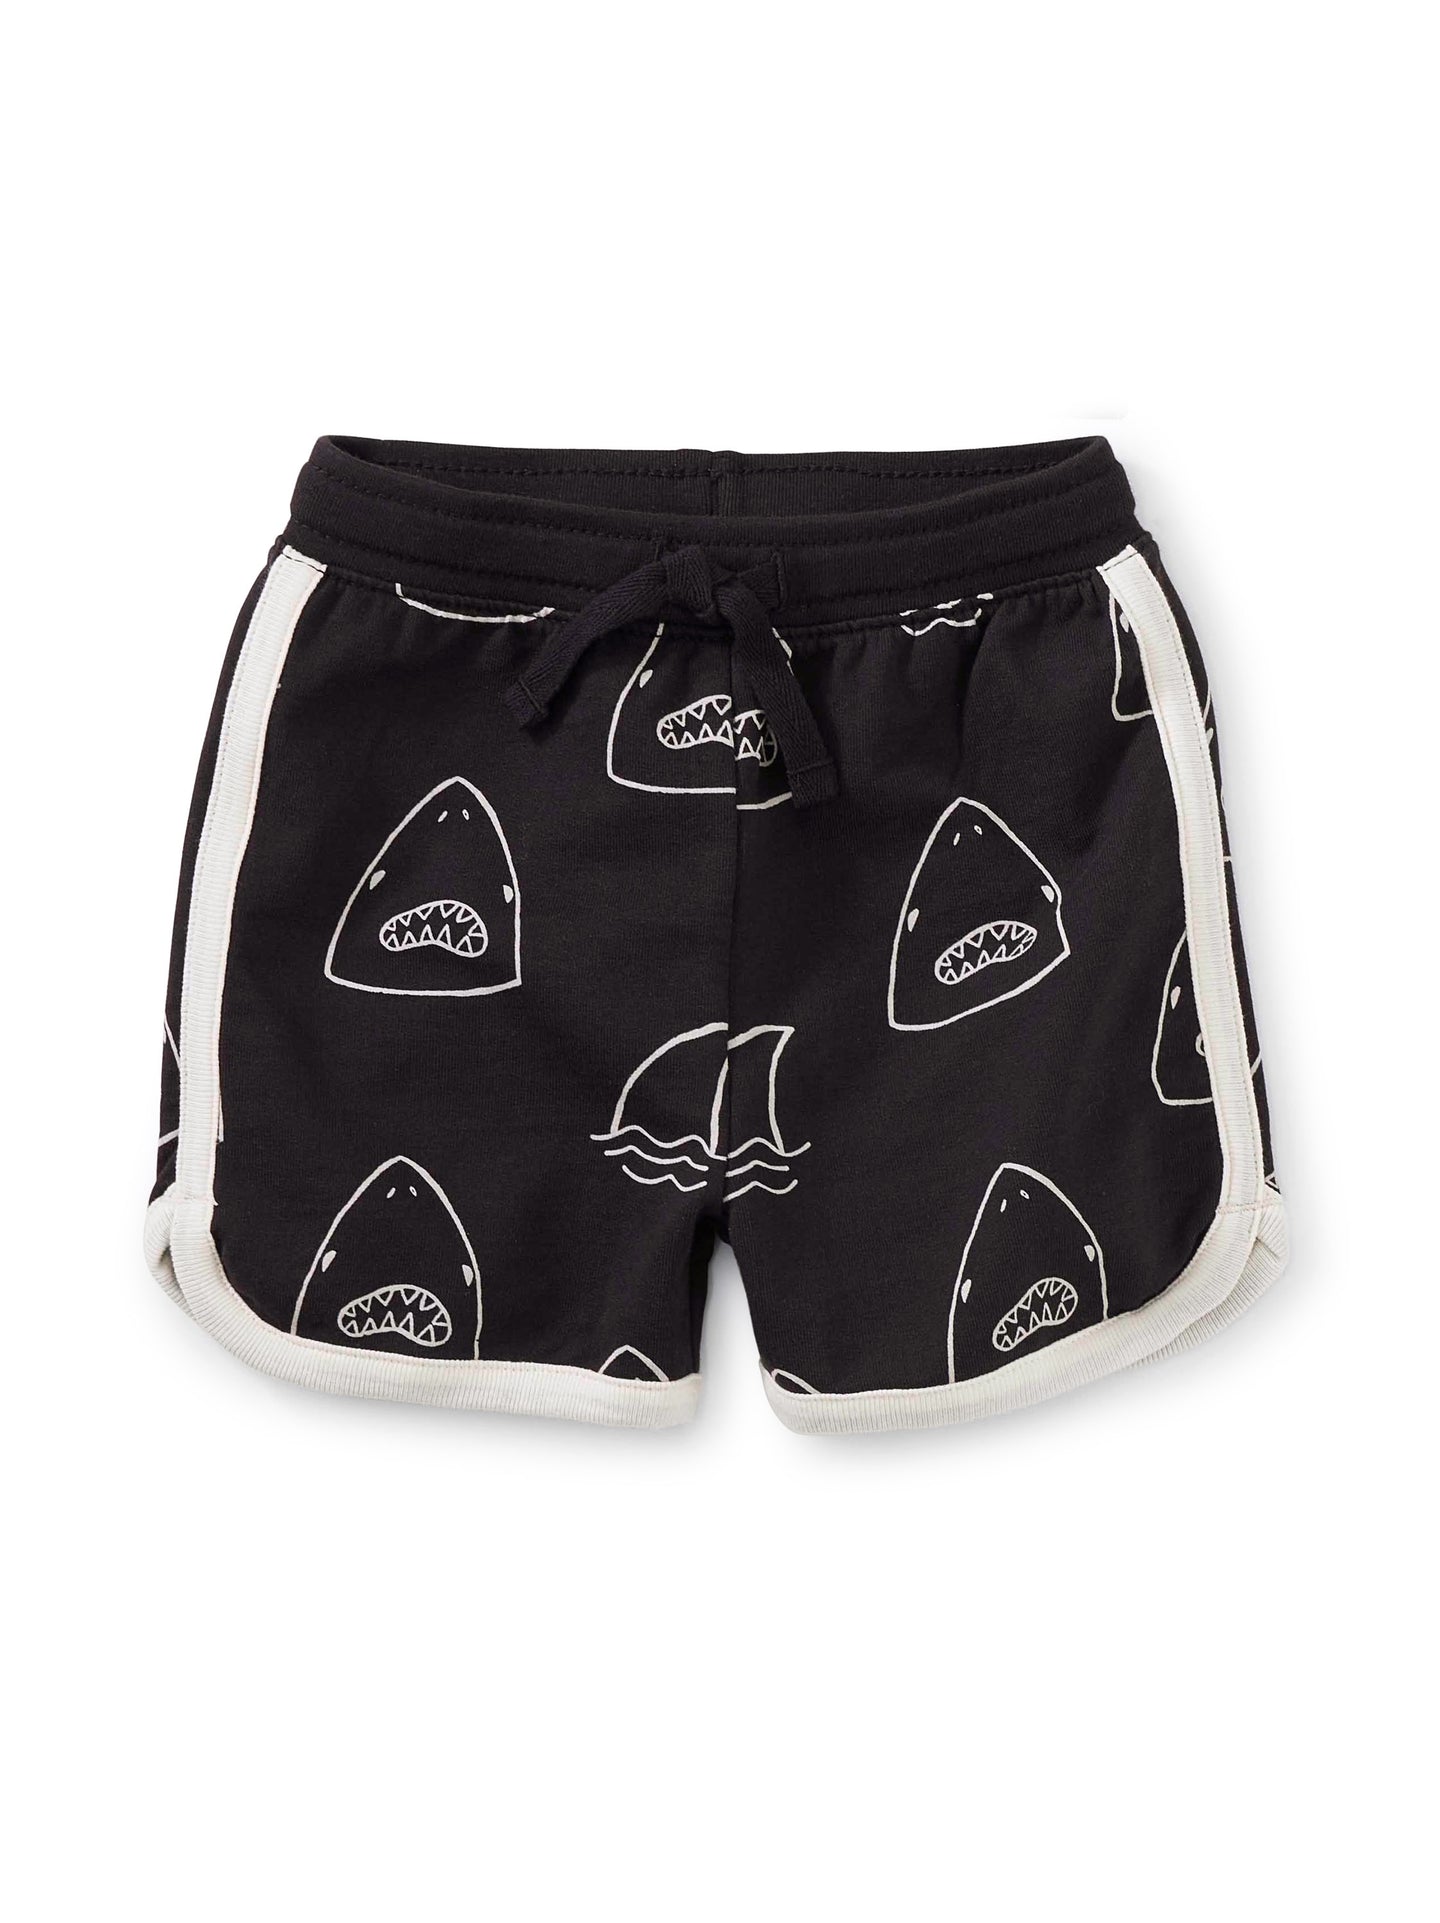 Tea Collection - Baby Sport Shorts - Shark Bite